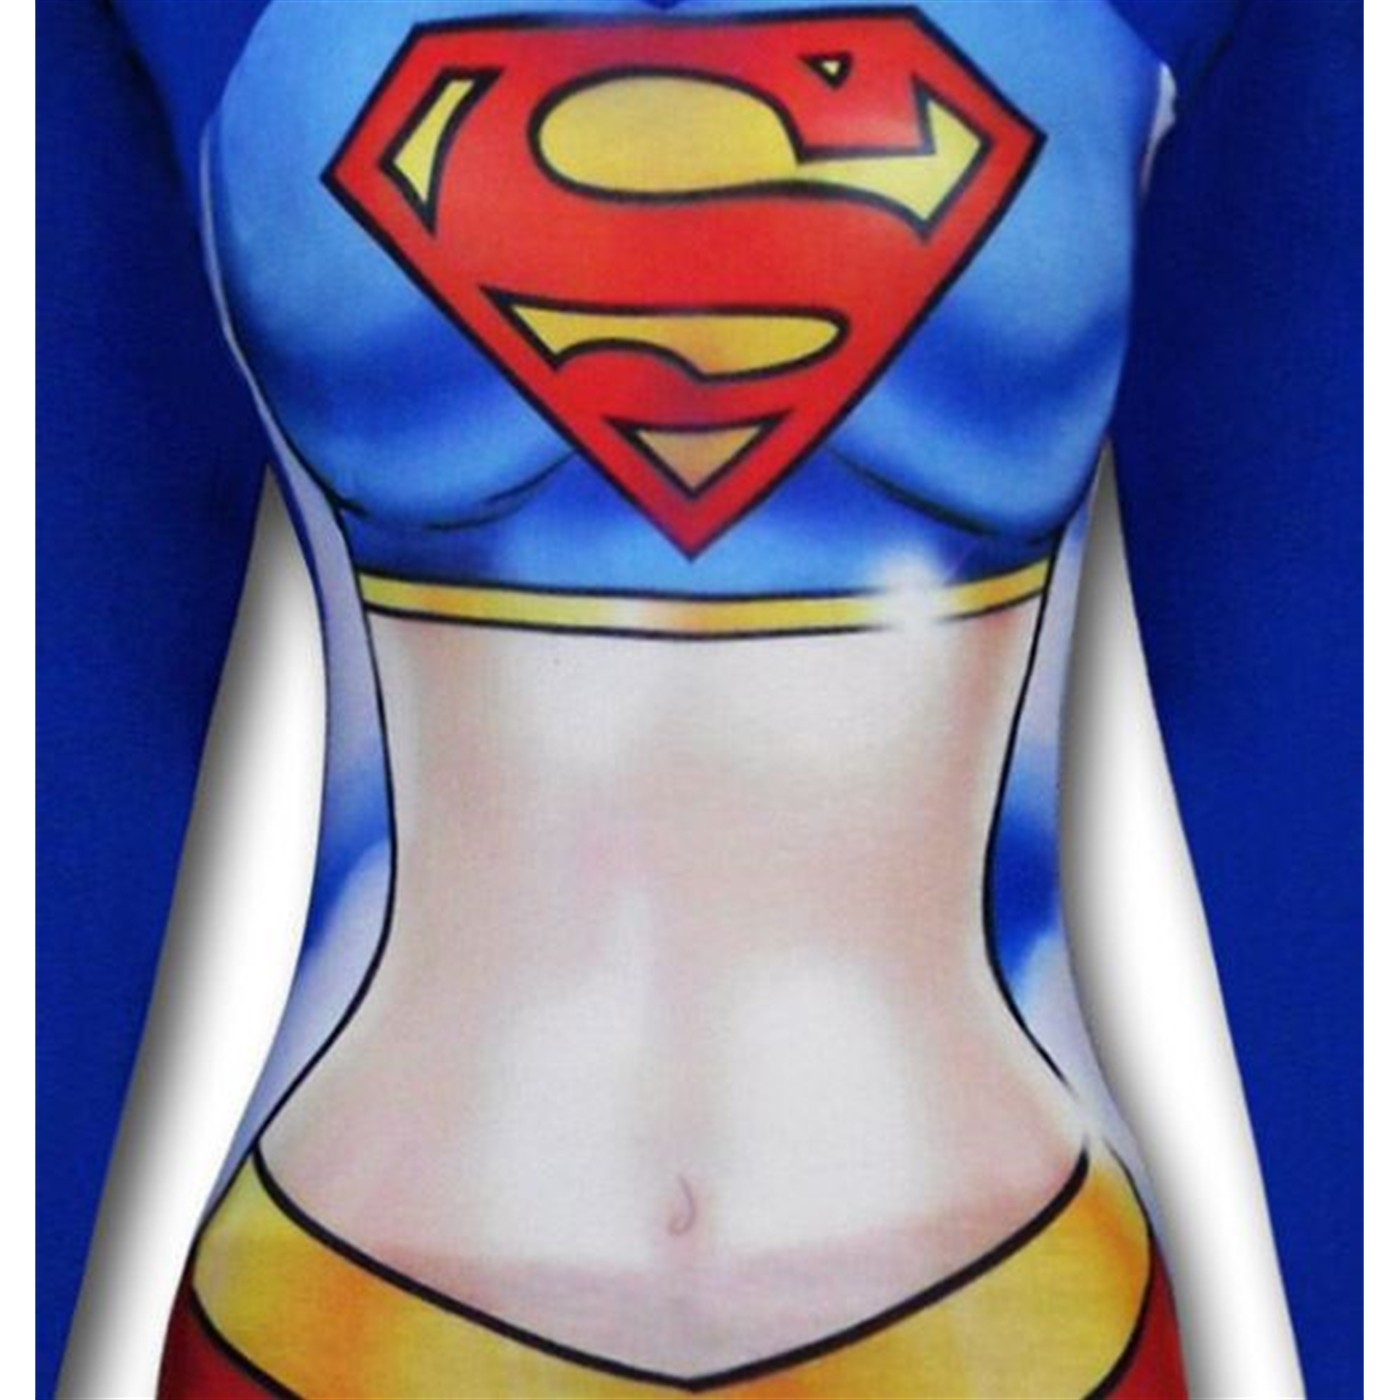 Supergirl Women's Super Sleep Set